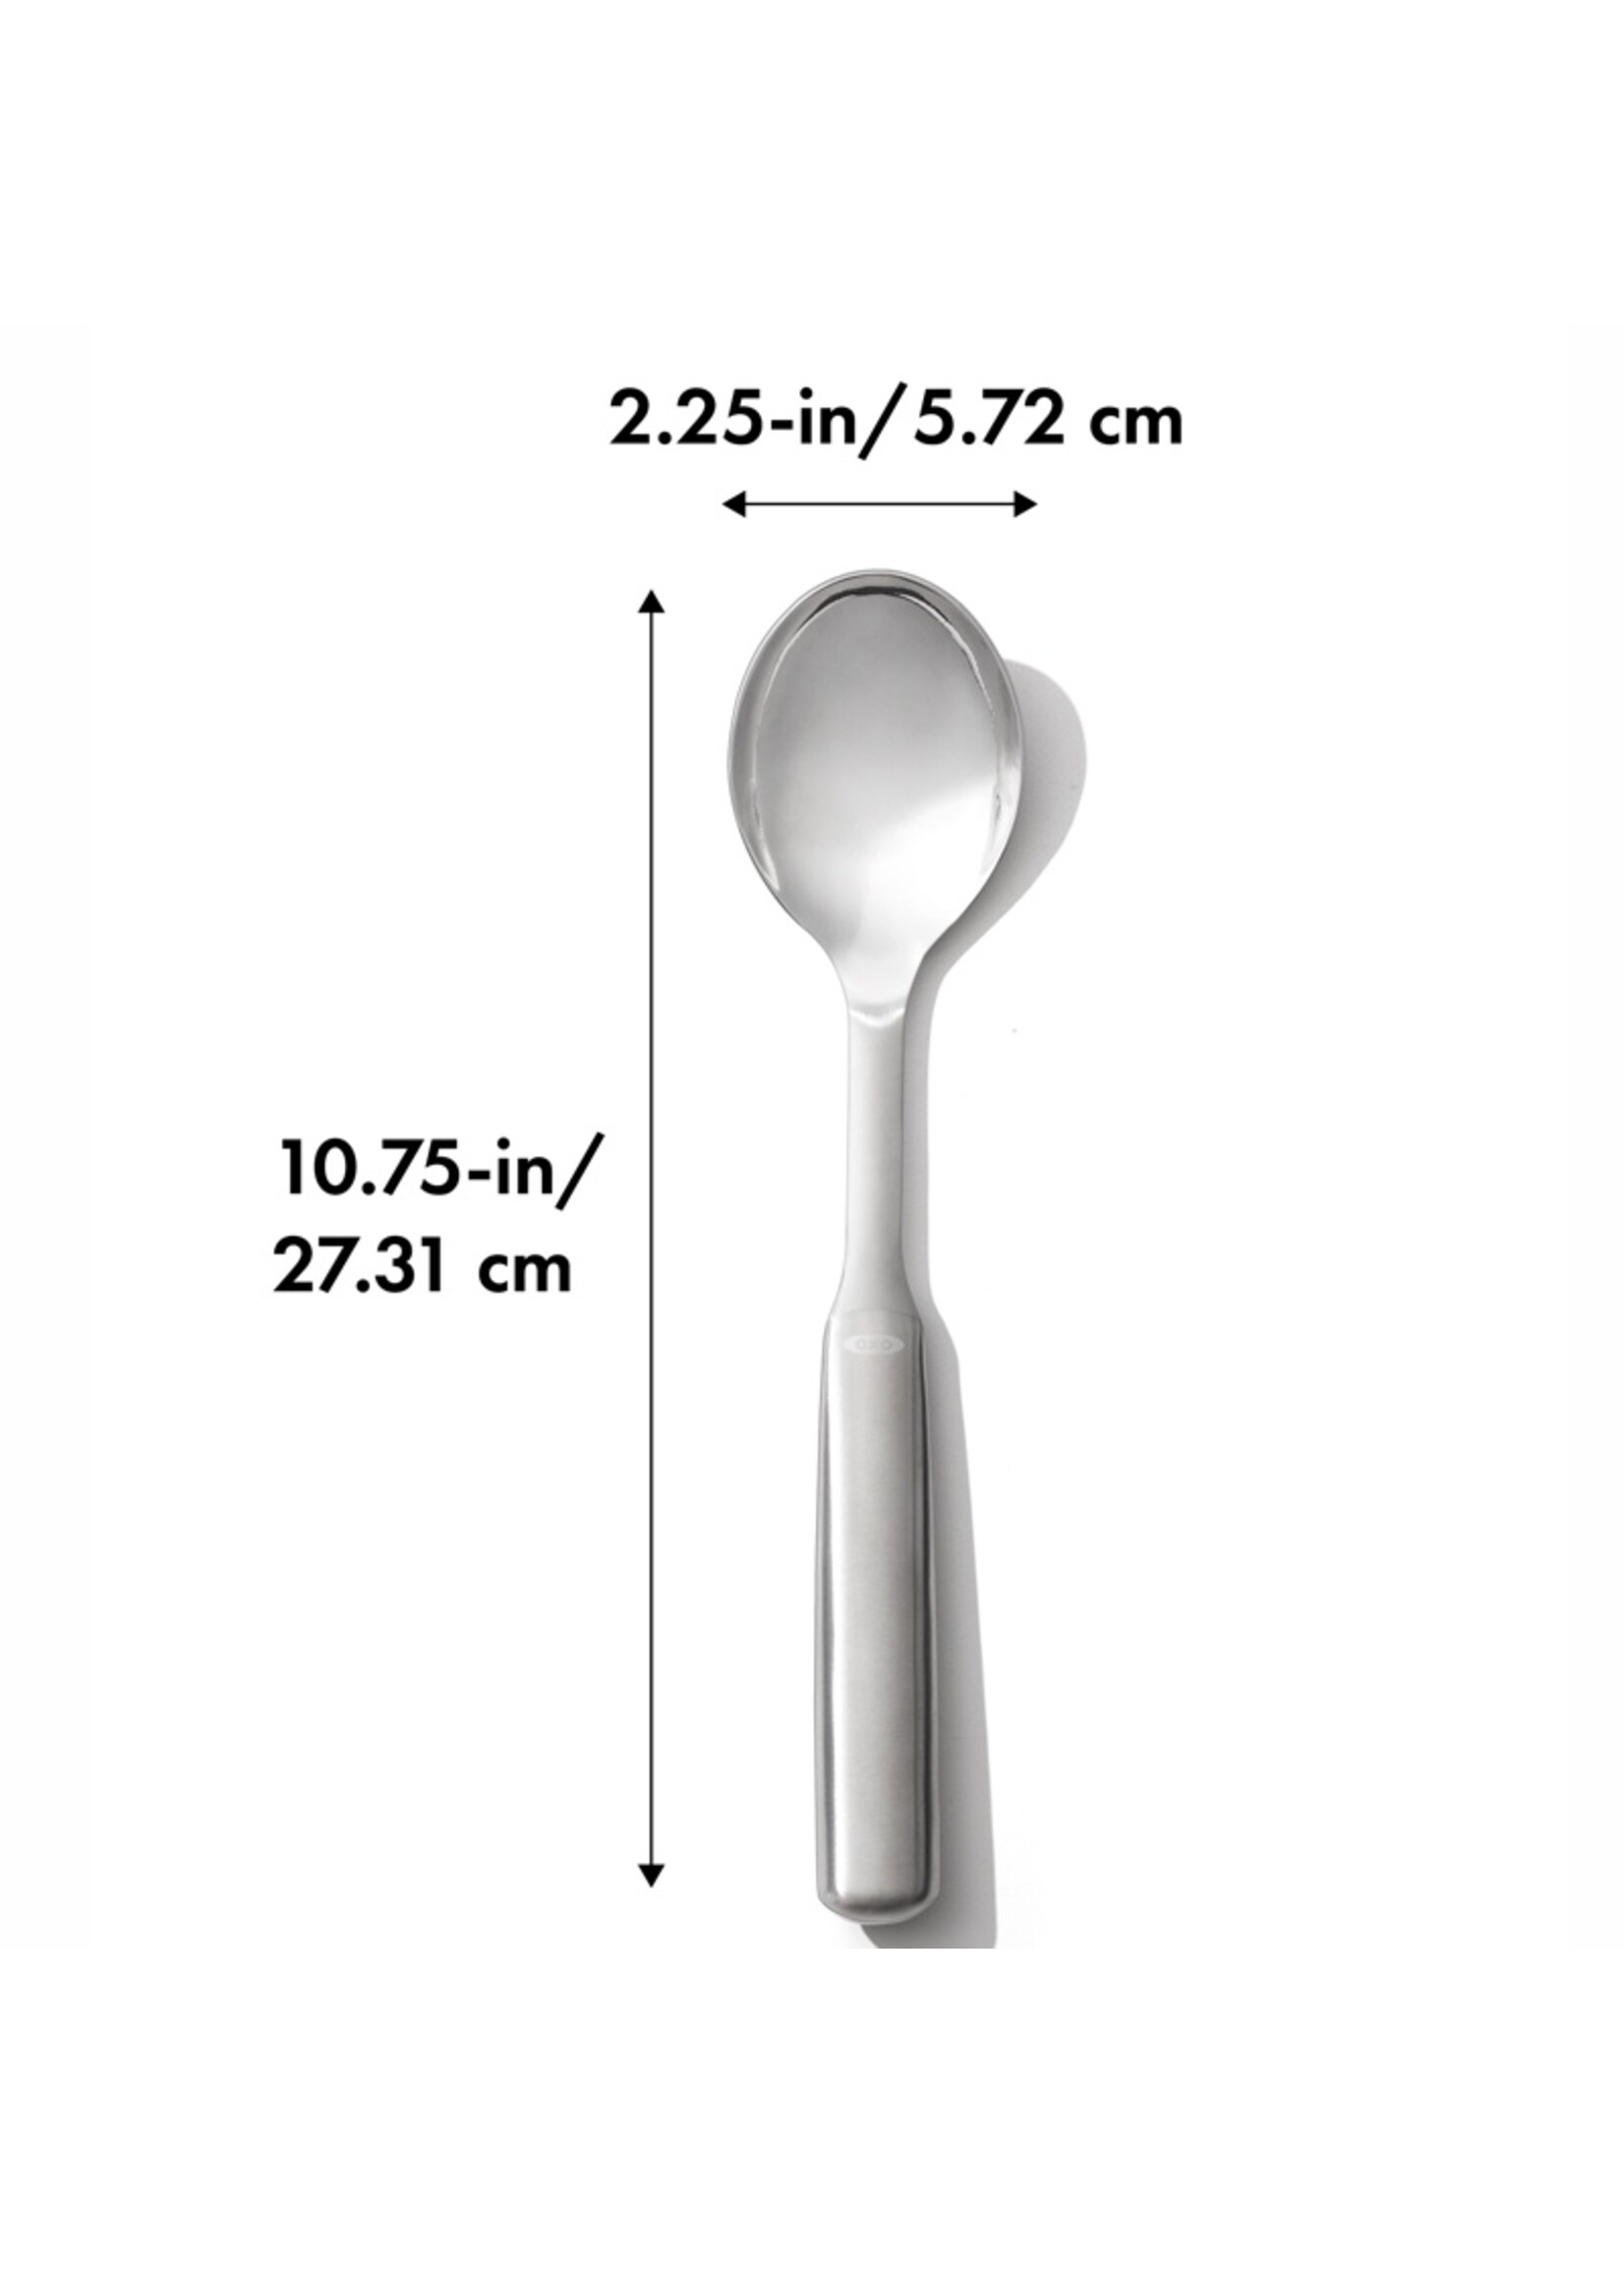 Danesco Oxo Steel Solid Serving Spoon